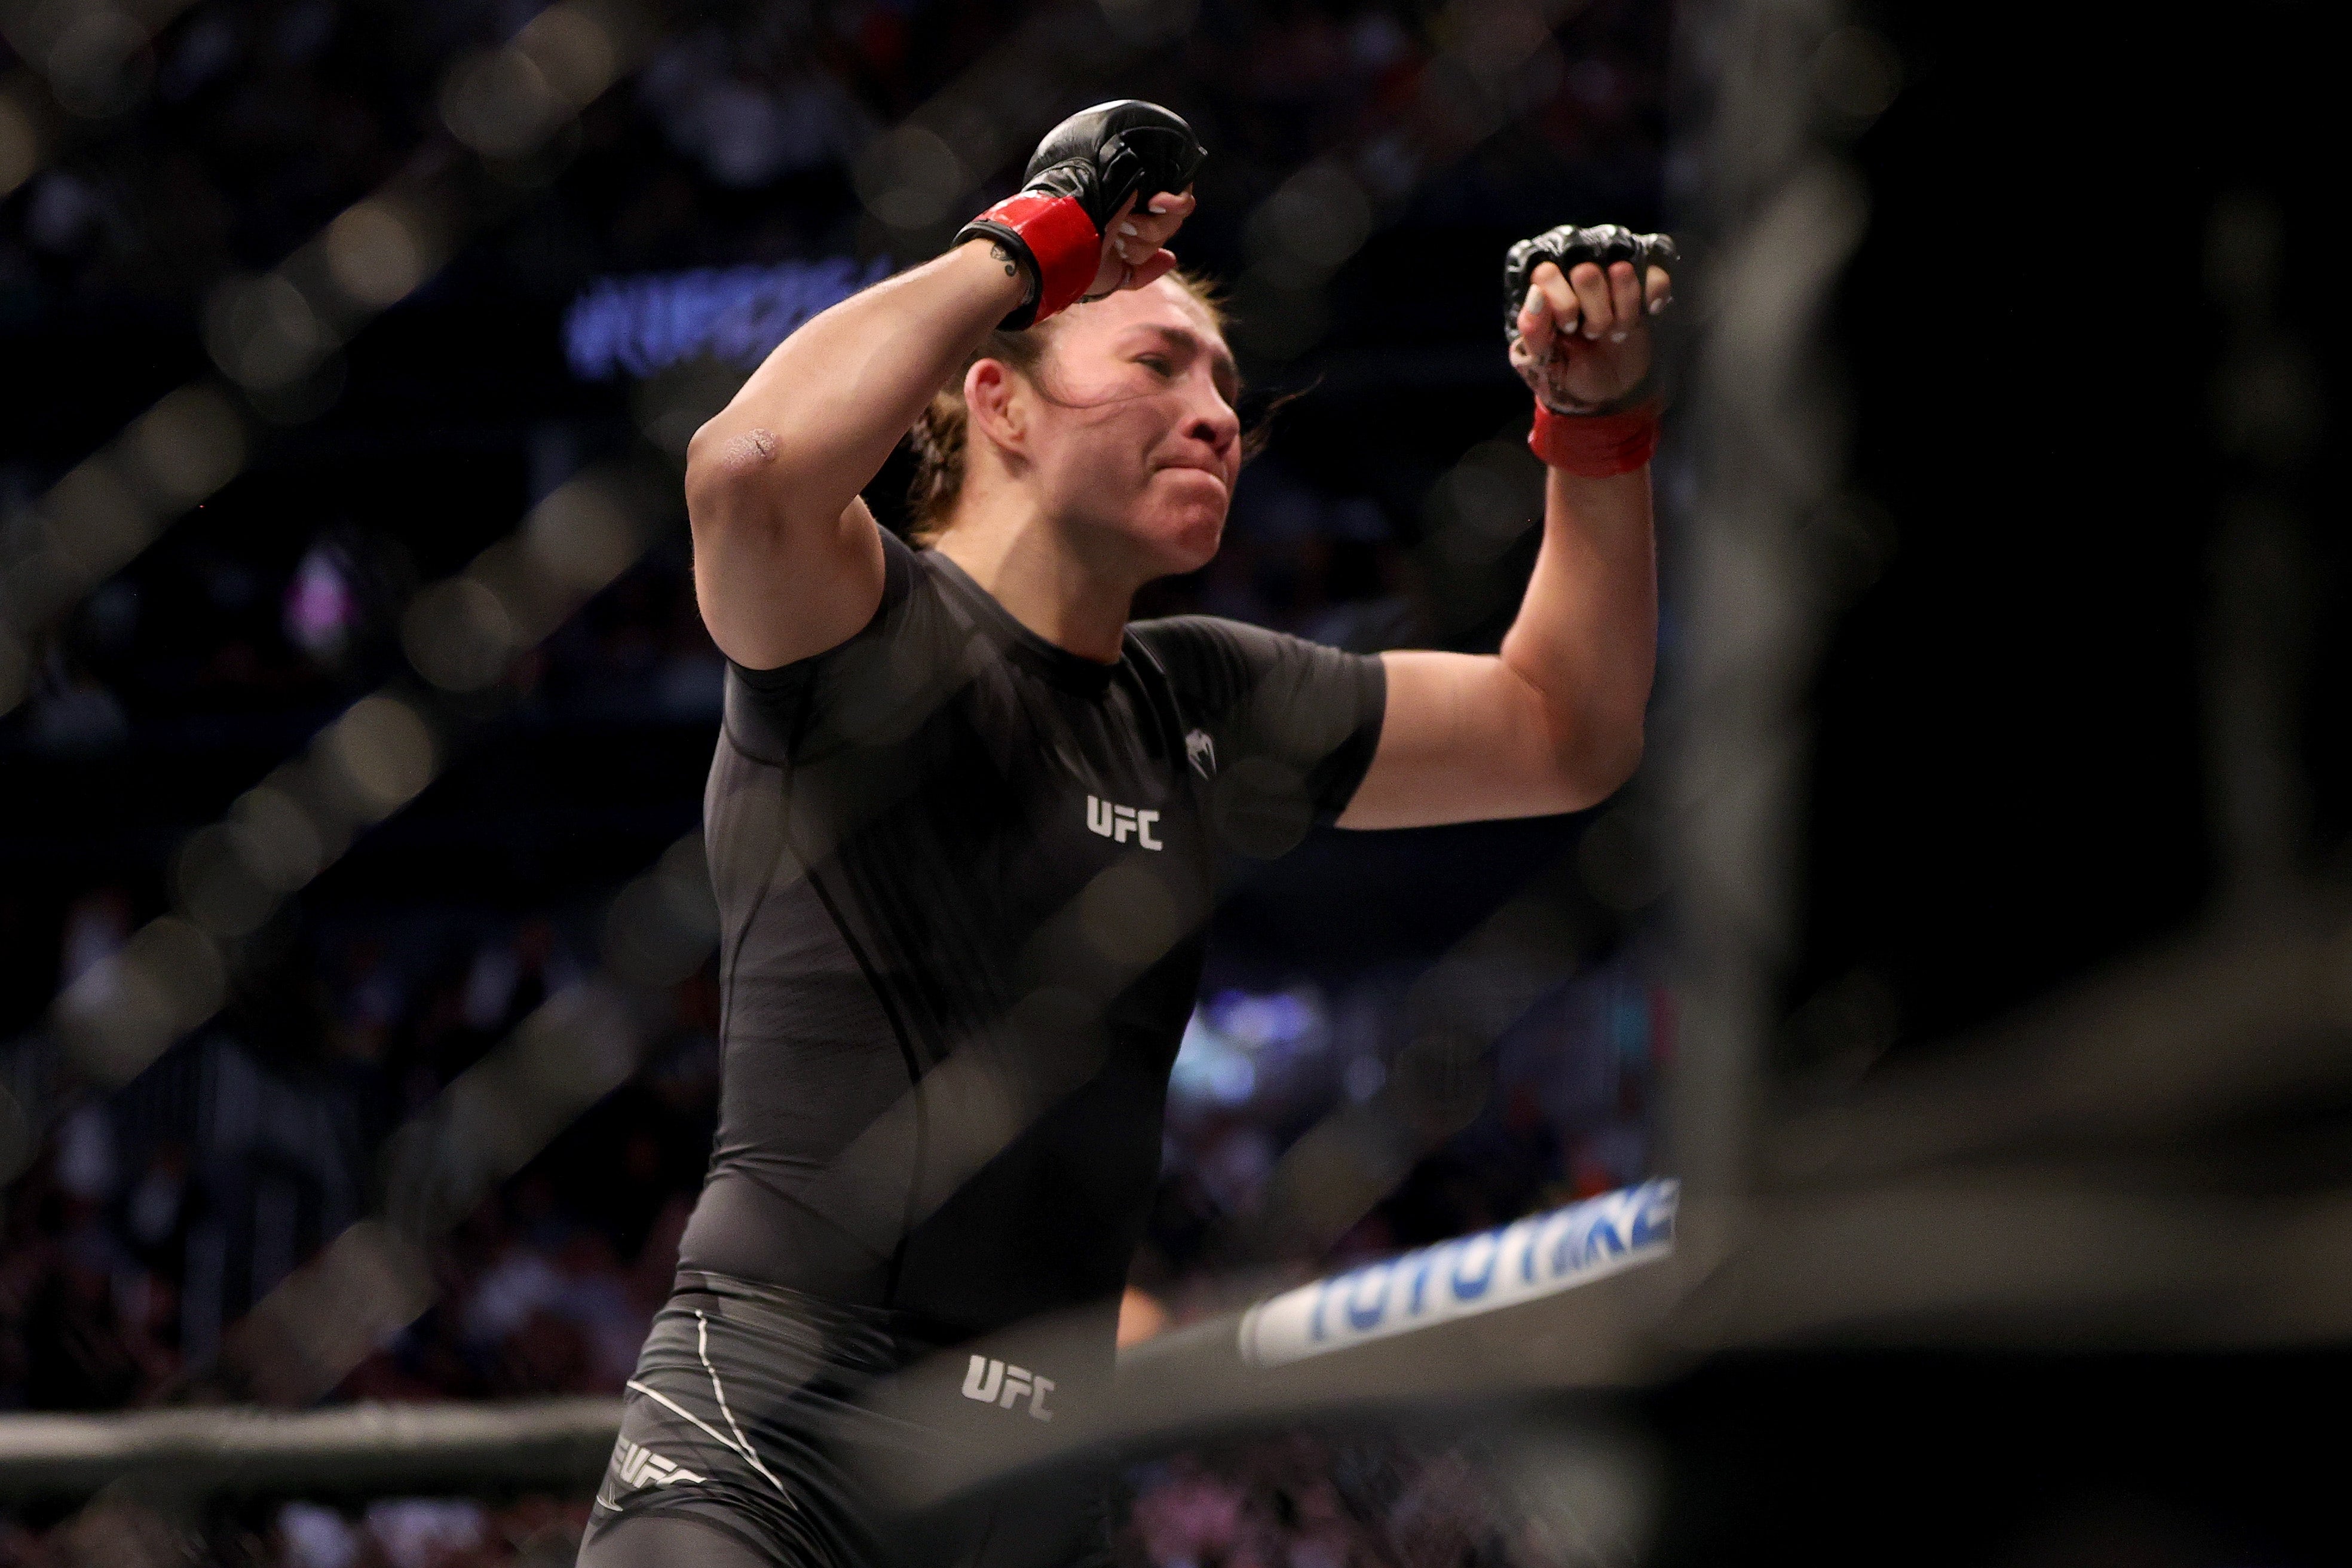 Irene Aldana will challenge for the UFC women’s bantamweight title